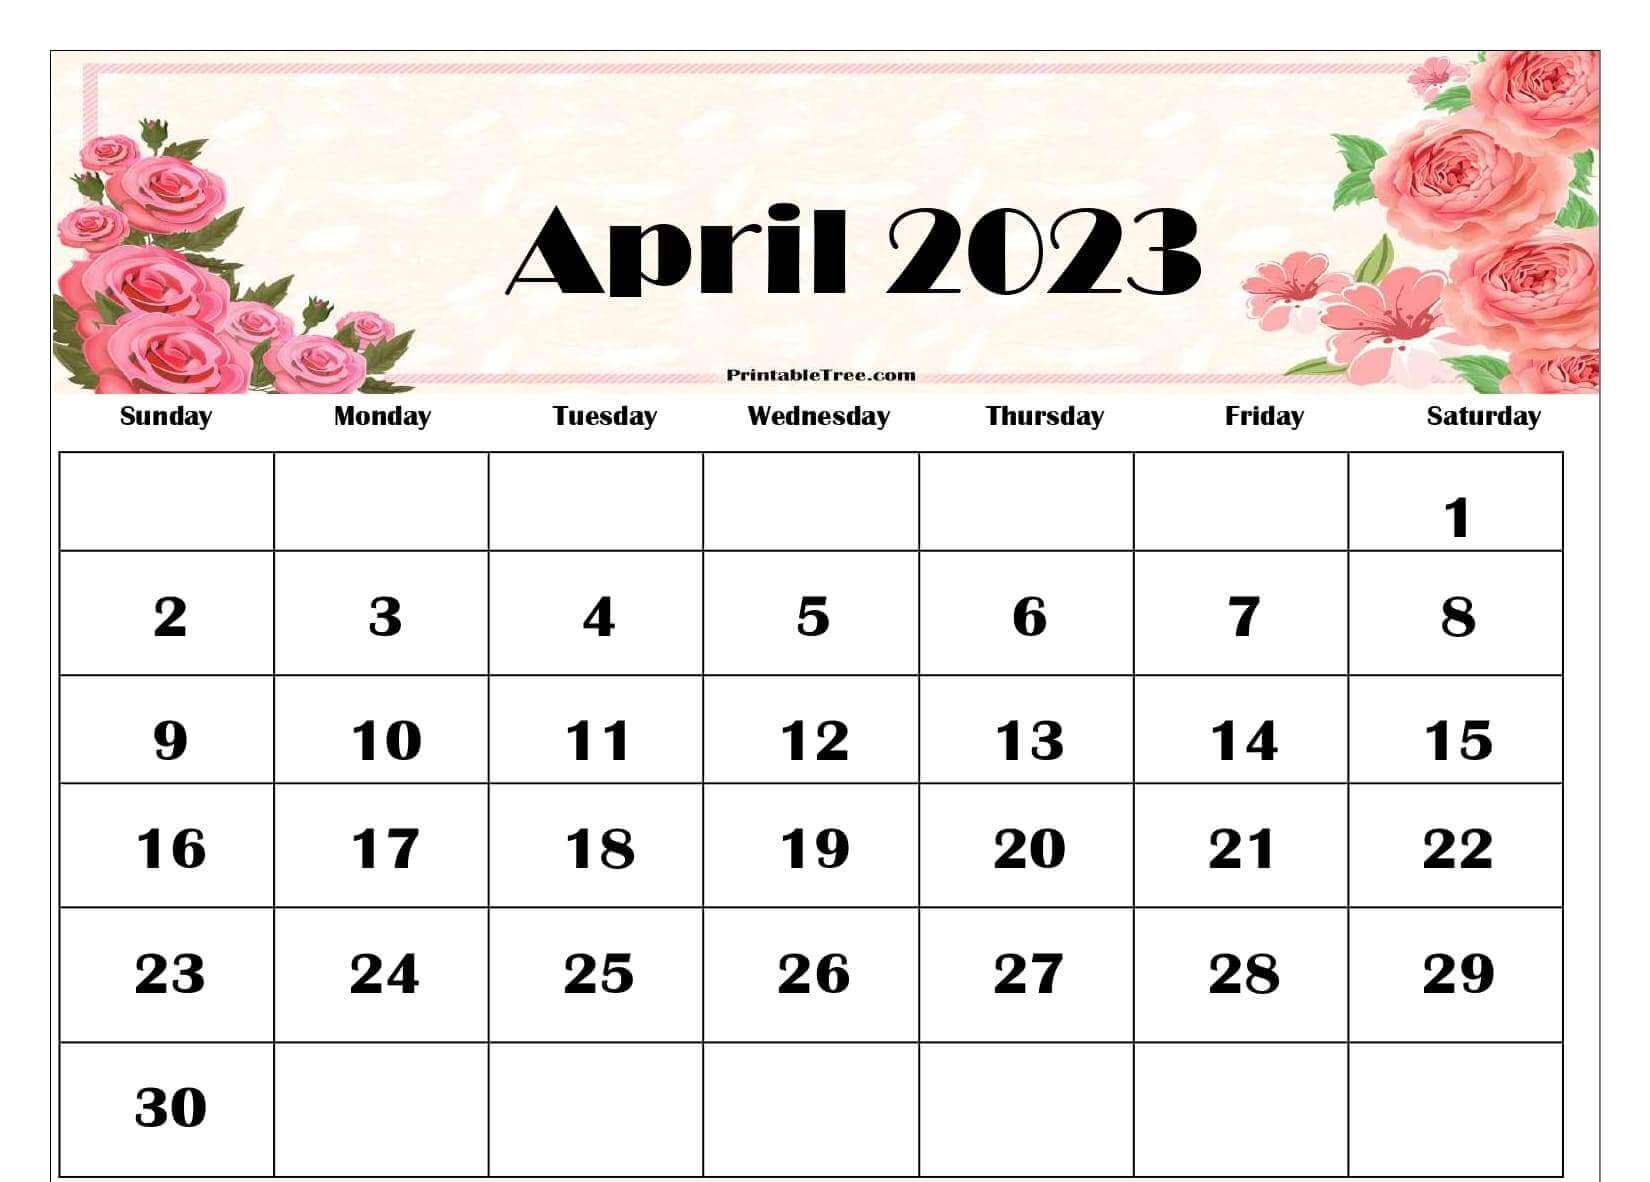 April 2023 Floral Calendar Printable